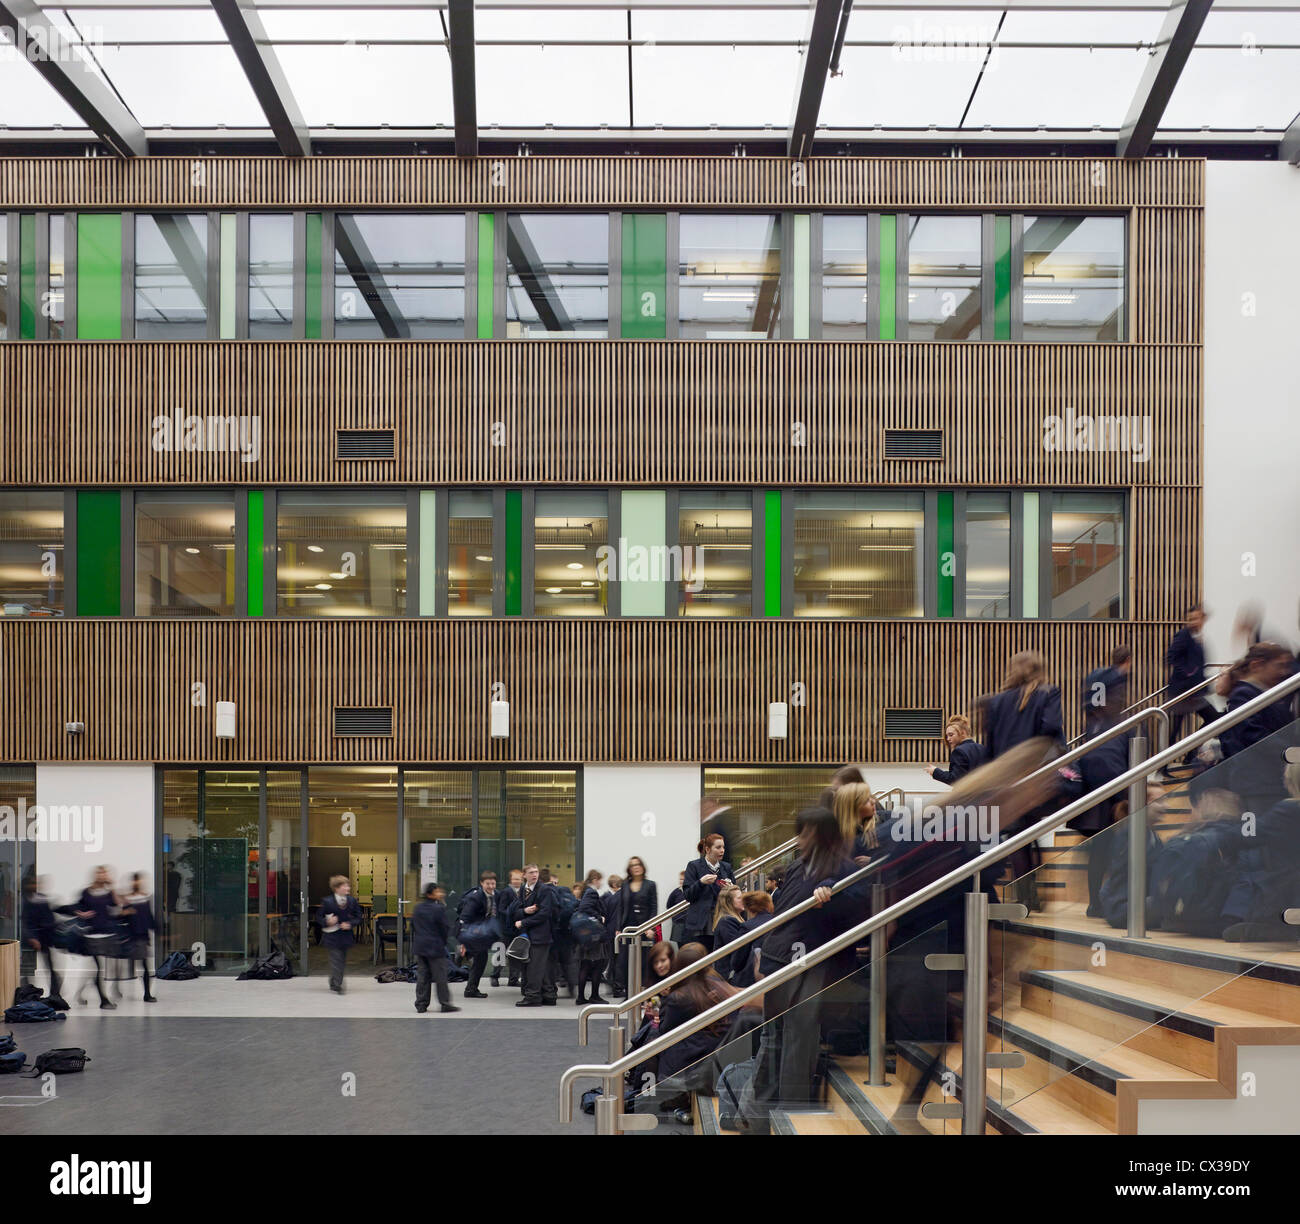 Stanley Park High School, Sutton, United Kingdom. Architect: Haverstock Associates LLP, 2011. Stock Photo